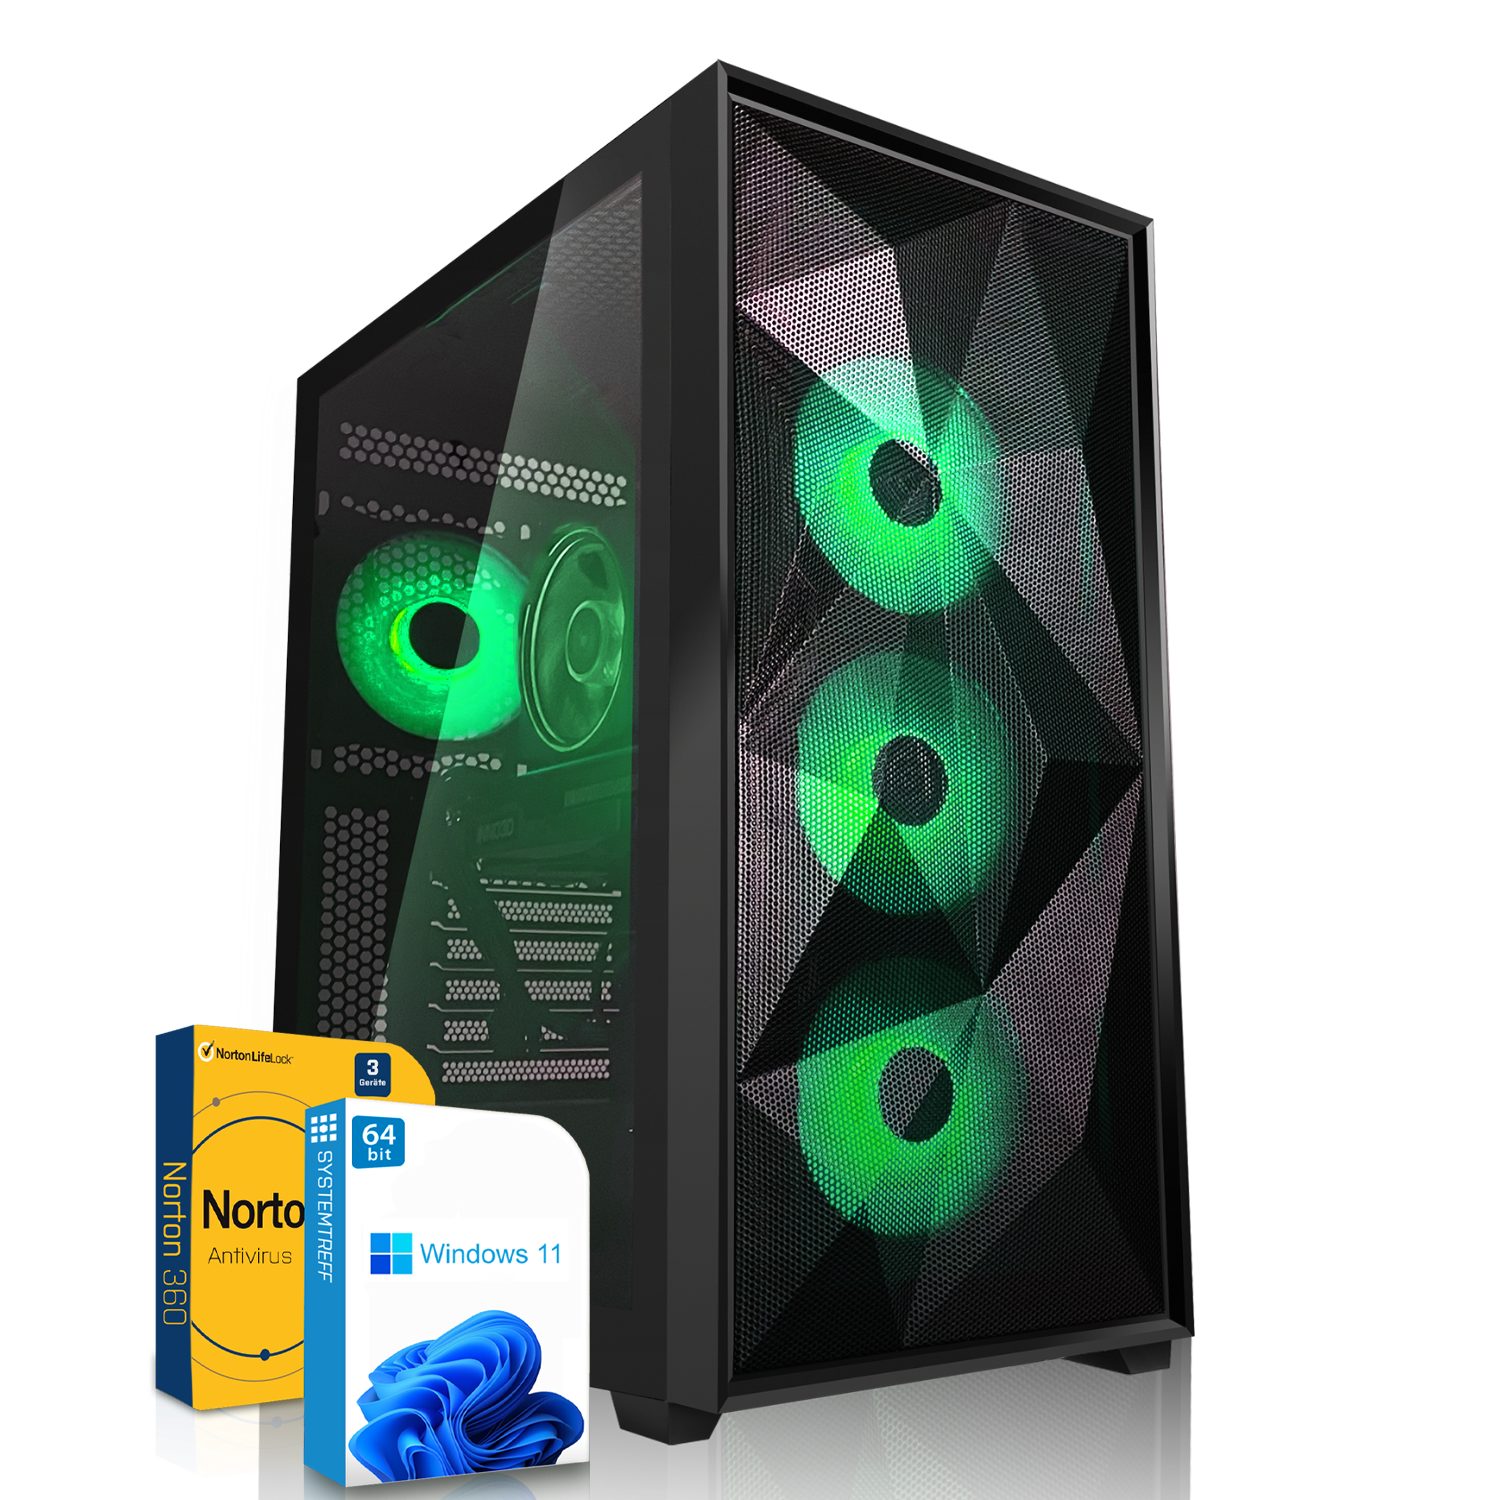 Ryzen Ti NVIDIA 1000 RTX™ 32 SYSTEMTREFF Prozessor, Super™ RAM, GB AMD AMD Pro, PC 7 Windows High-End mit GB 11 Gaming Gaming GeForce 7700X, 4070 Ryzen™ 7 mSSD,